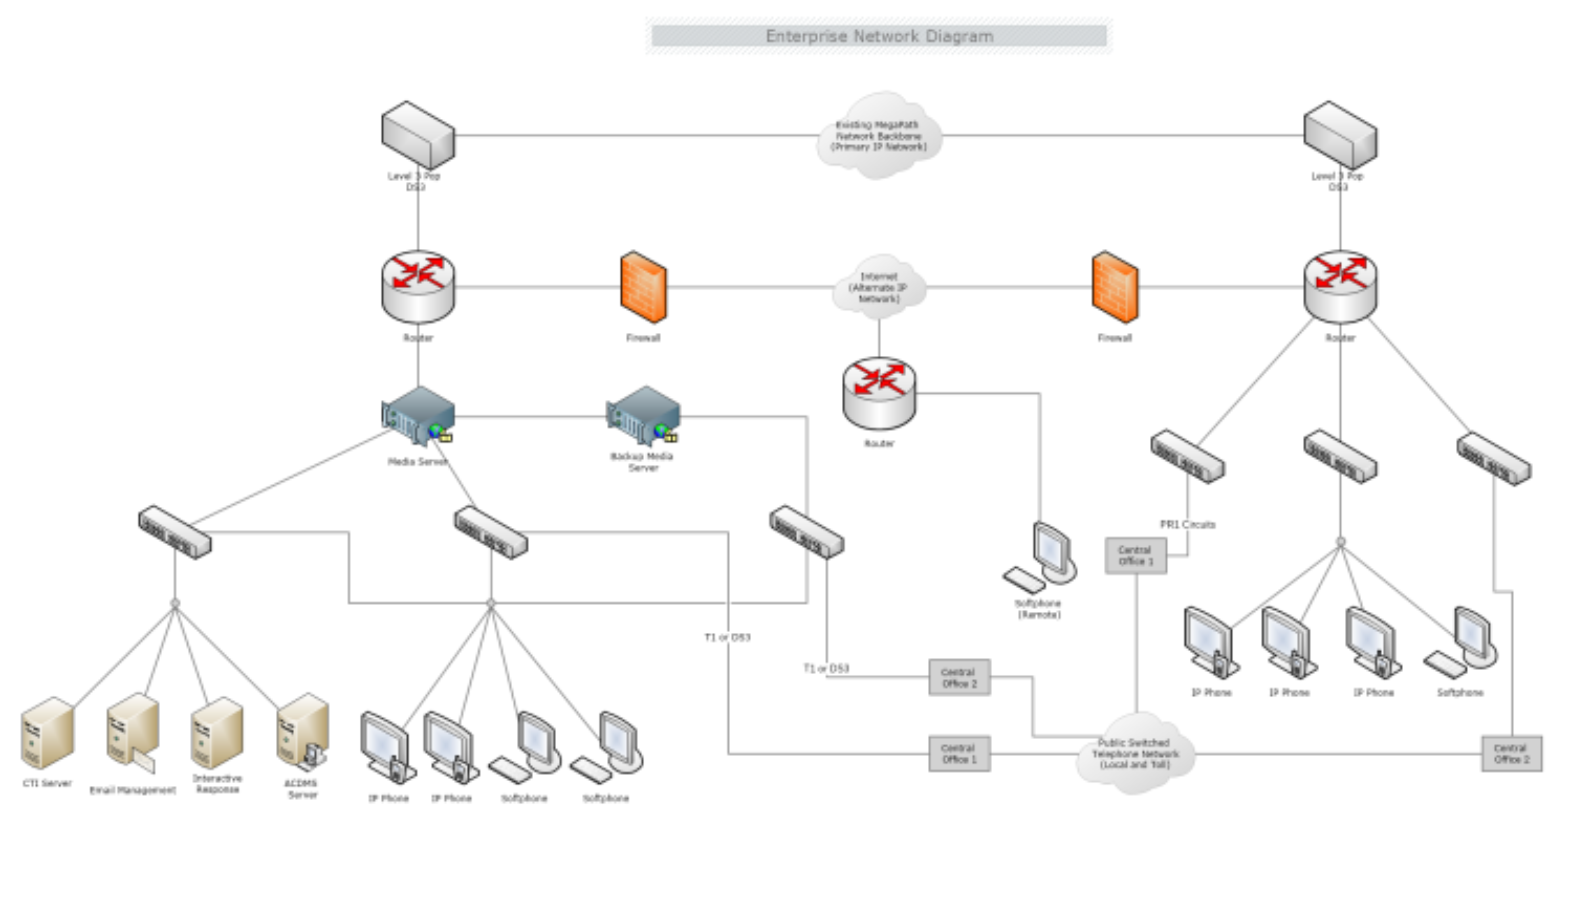 Enterprise Network Diagram